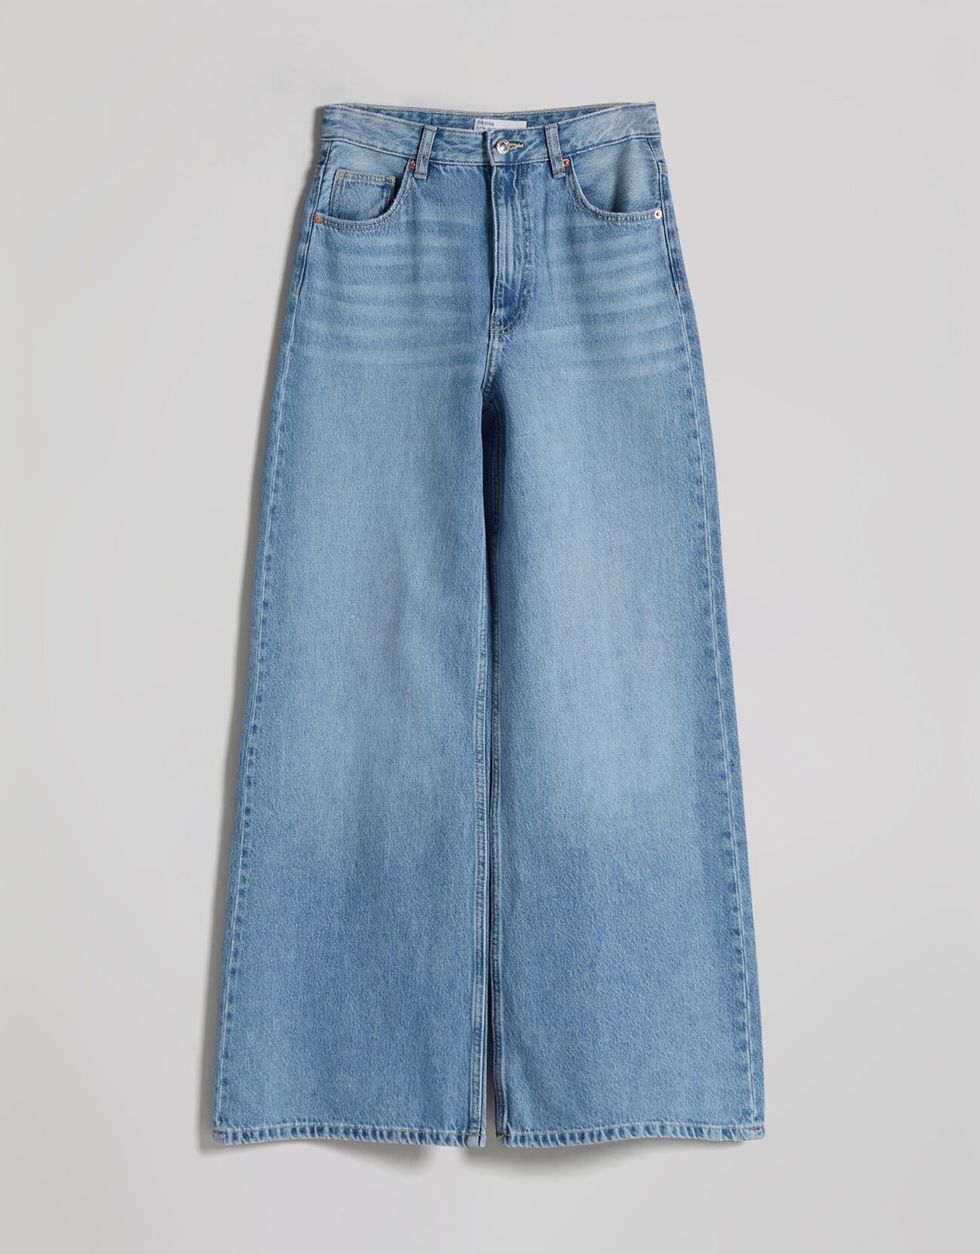 jeans larghi inverno 2021